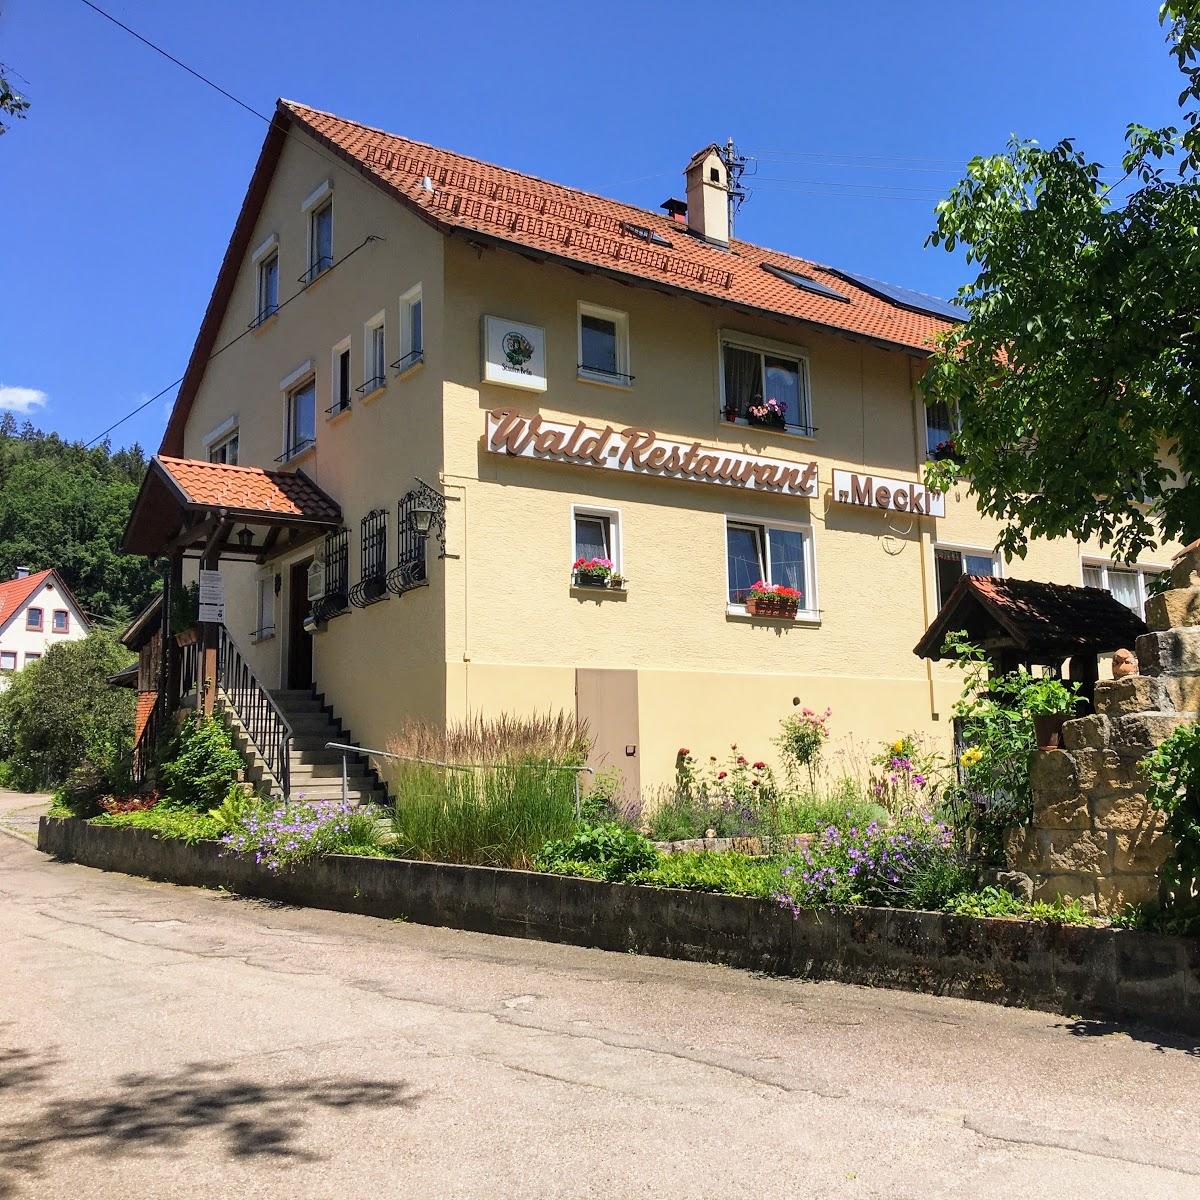 Restaurant "Zum Mecki" in  Alfdorf